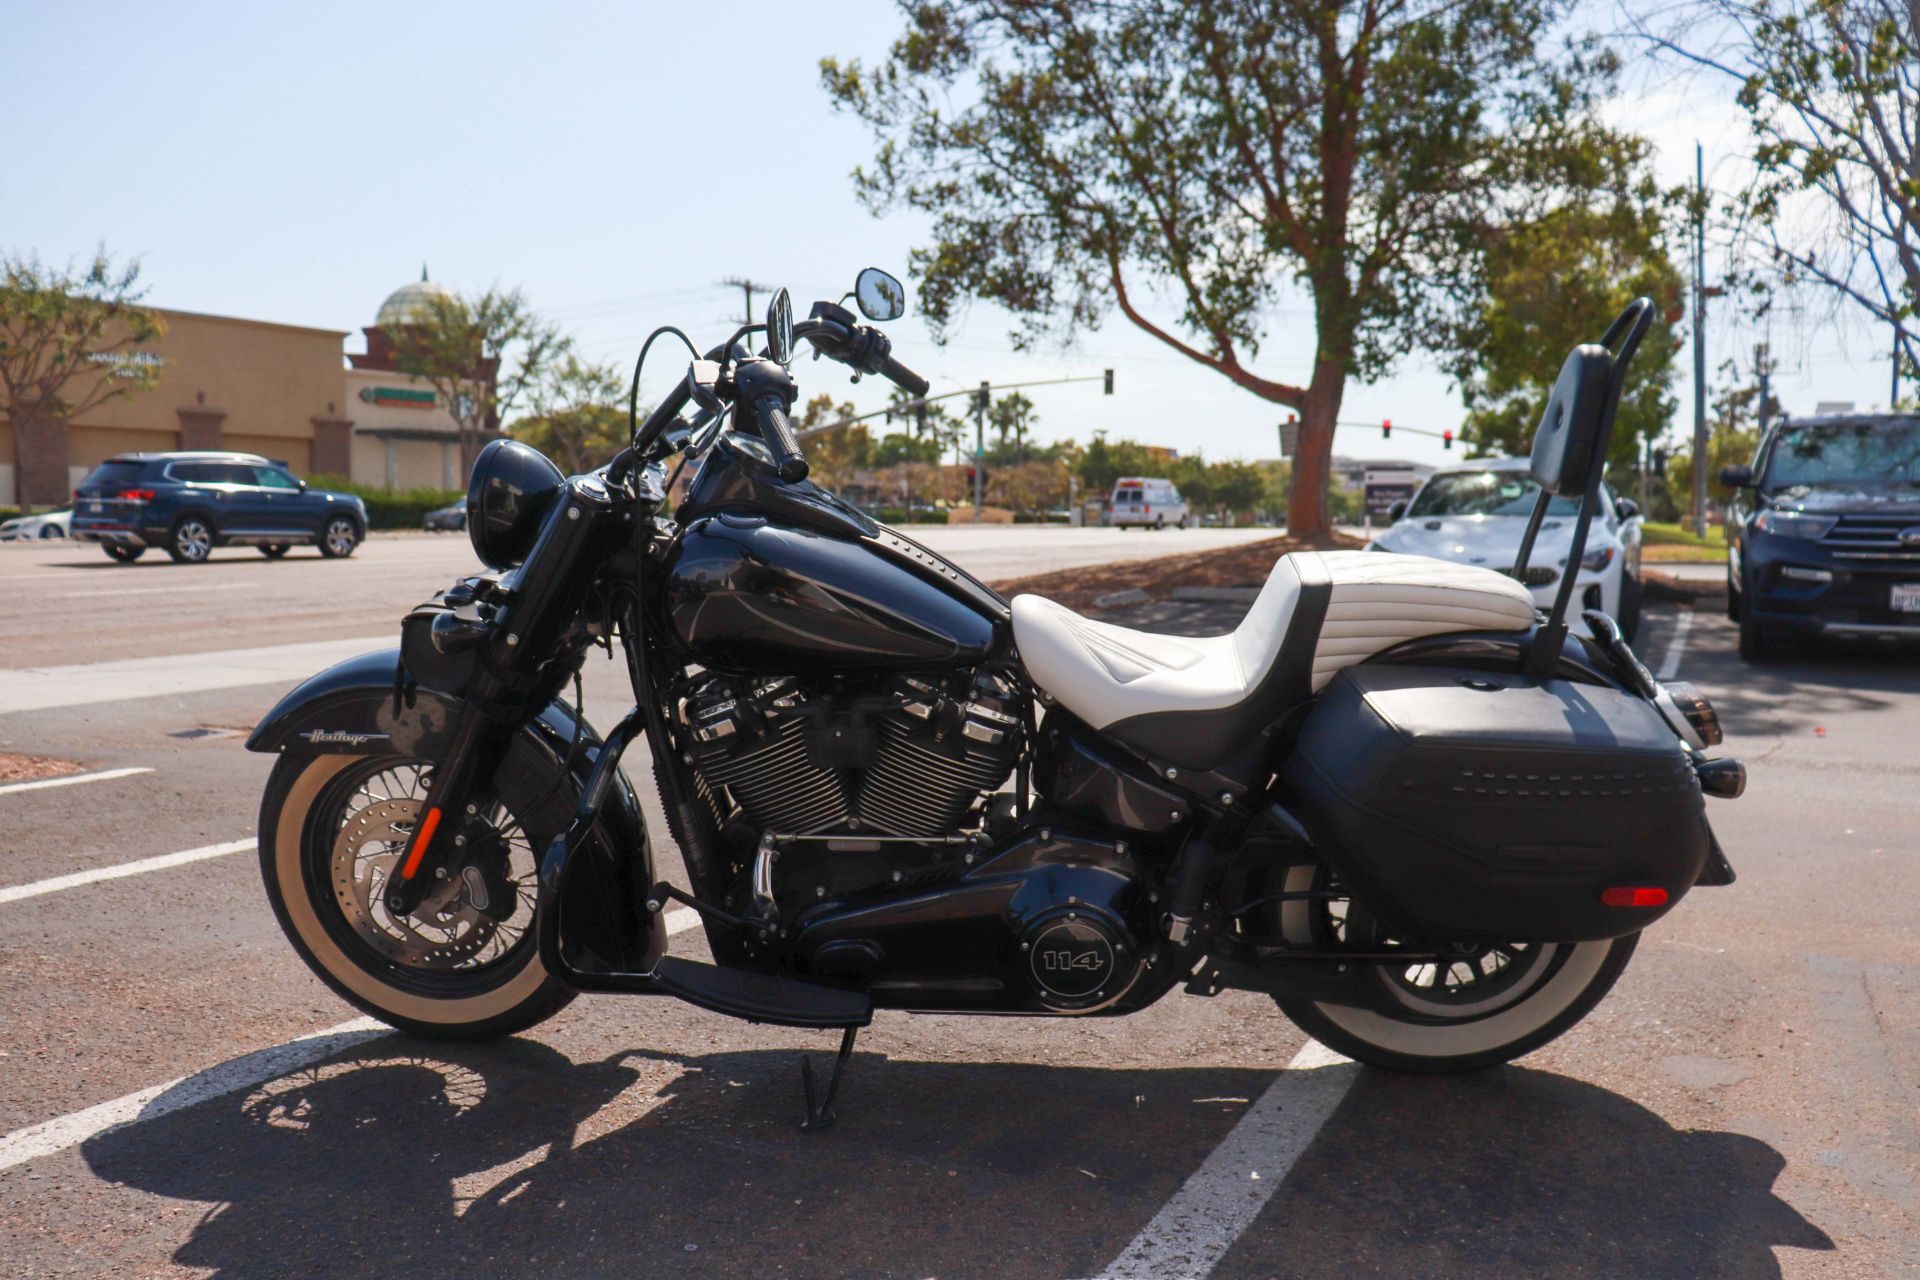 2020 Harley-Davidson Heritage Classic 114 in San Diego, California - Photo 5